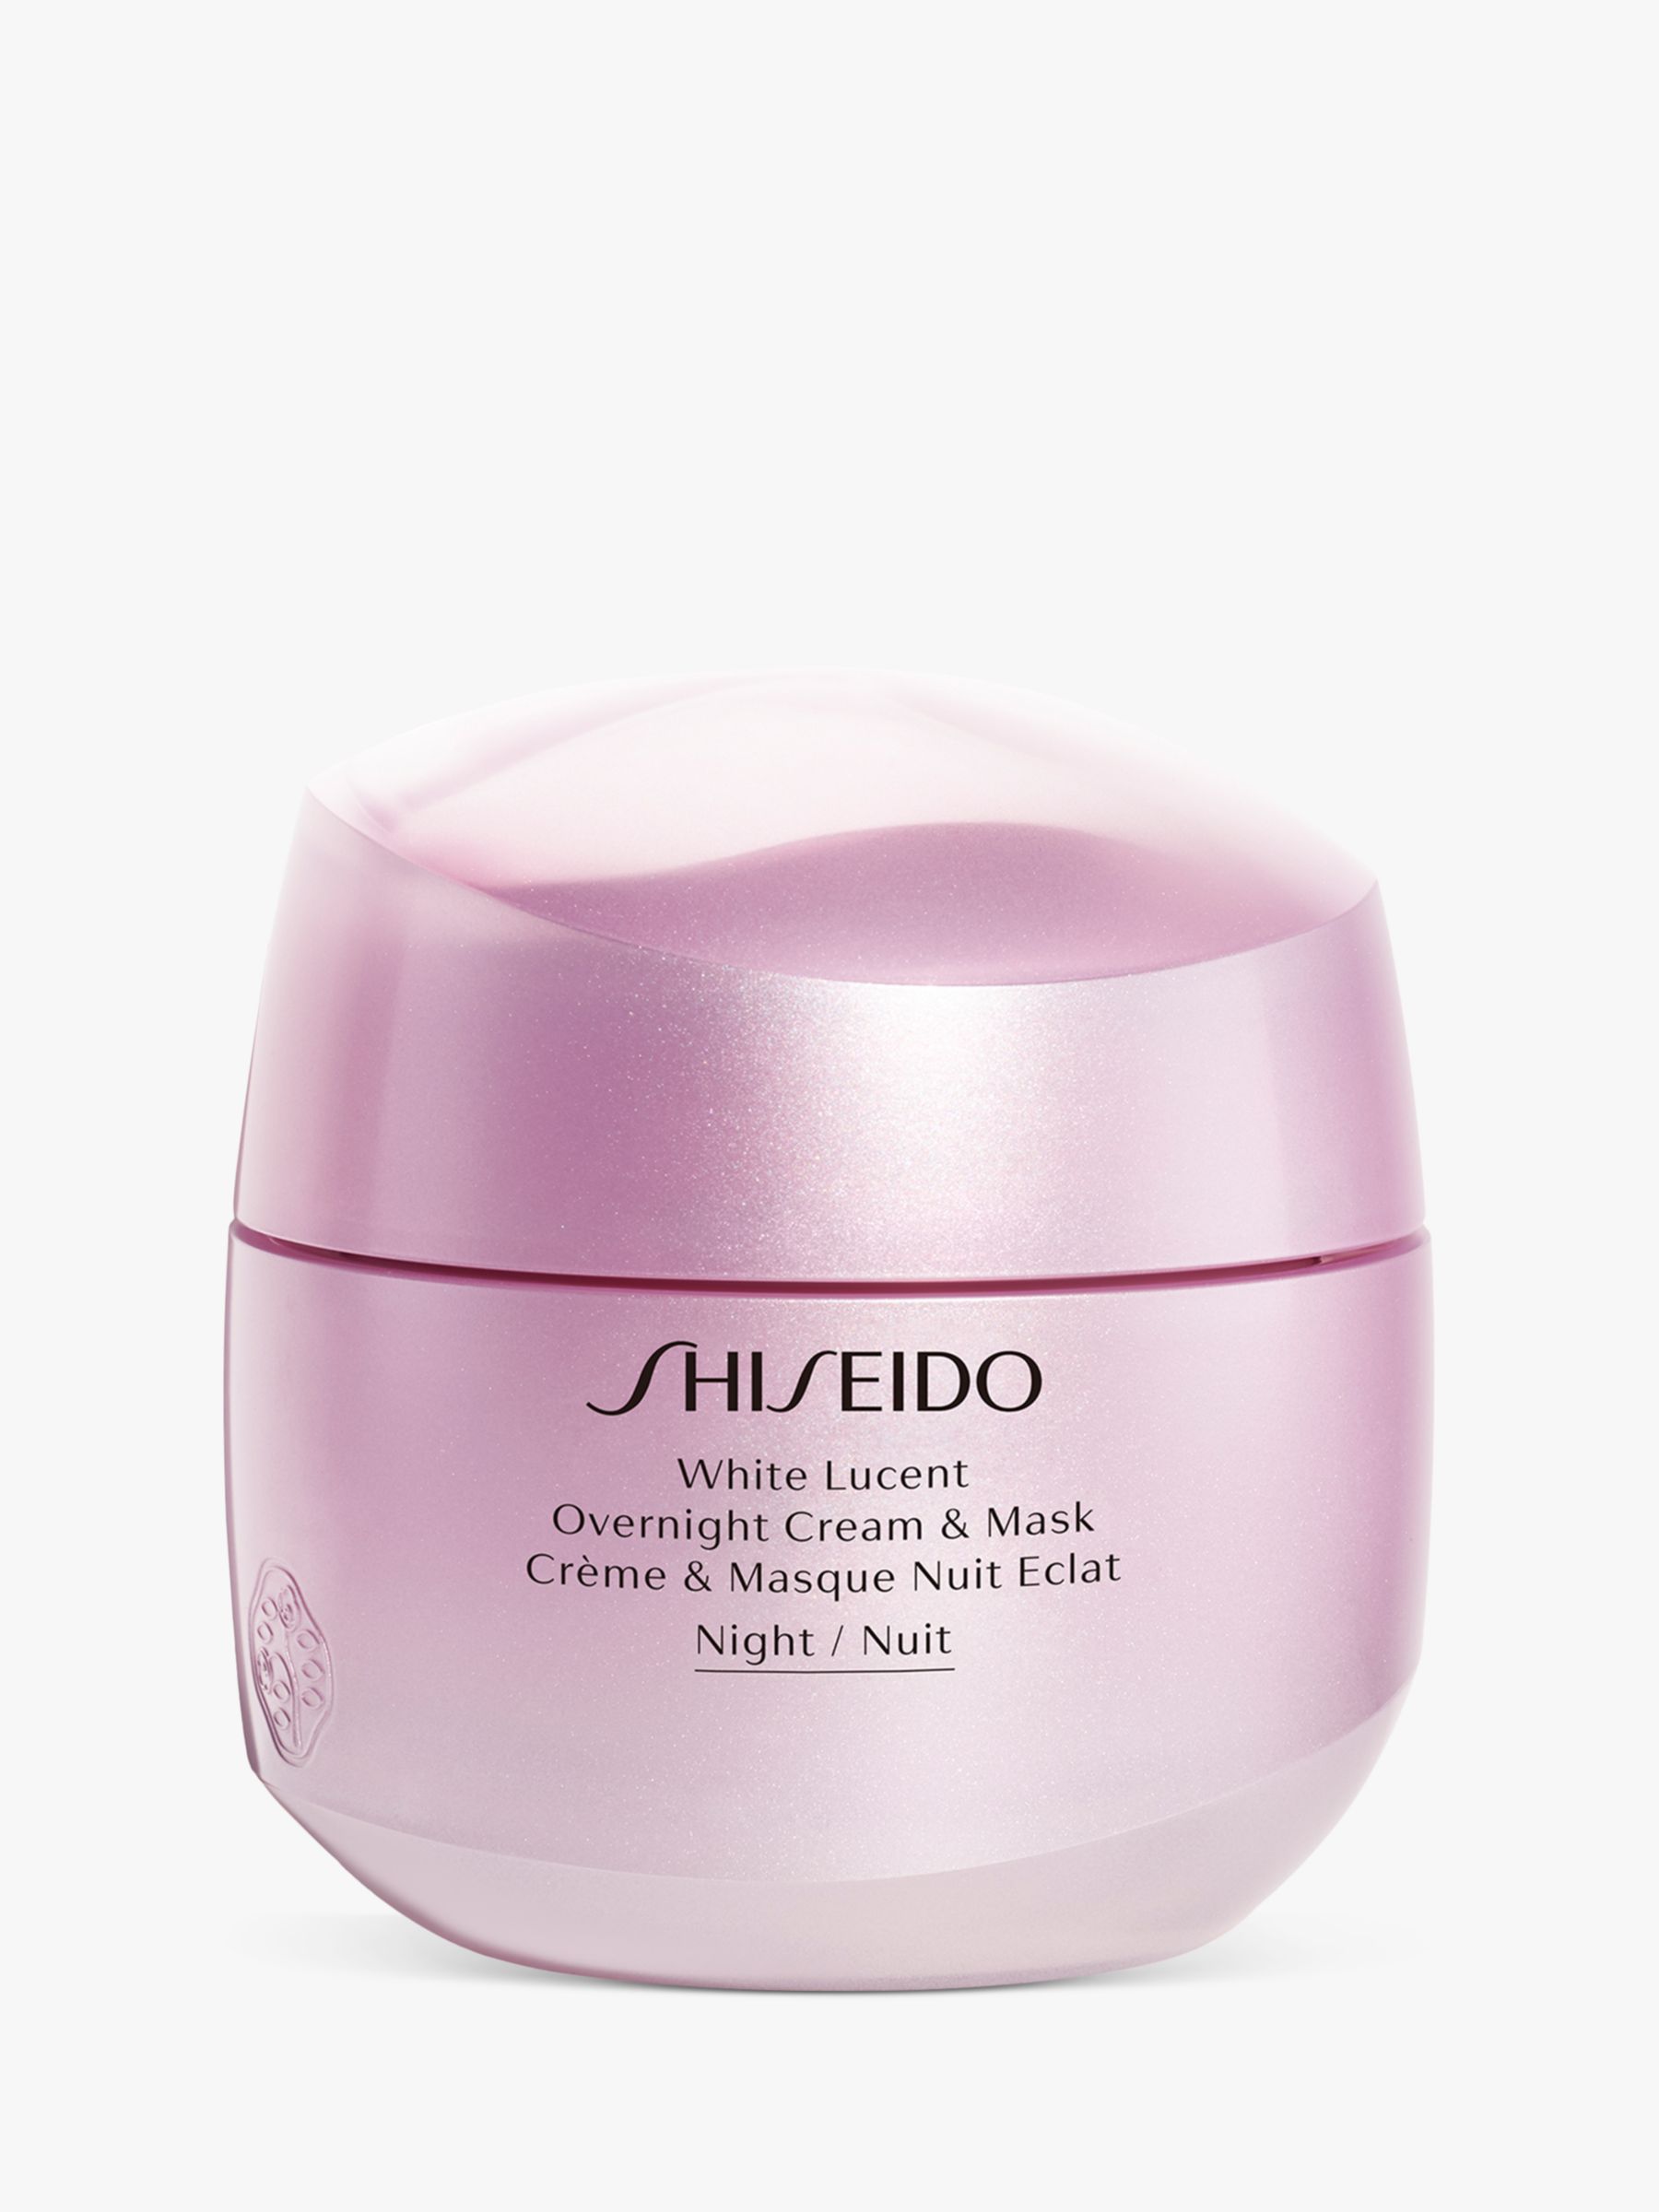 Shiseido White Lucent Overnight Cream & Mask, 75ml